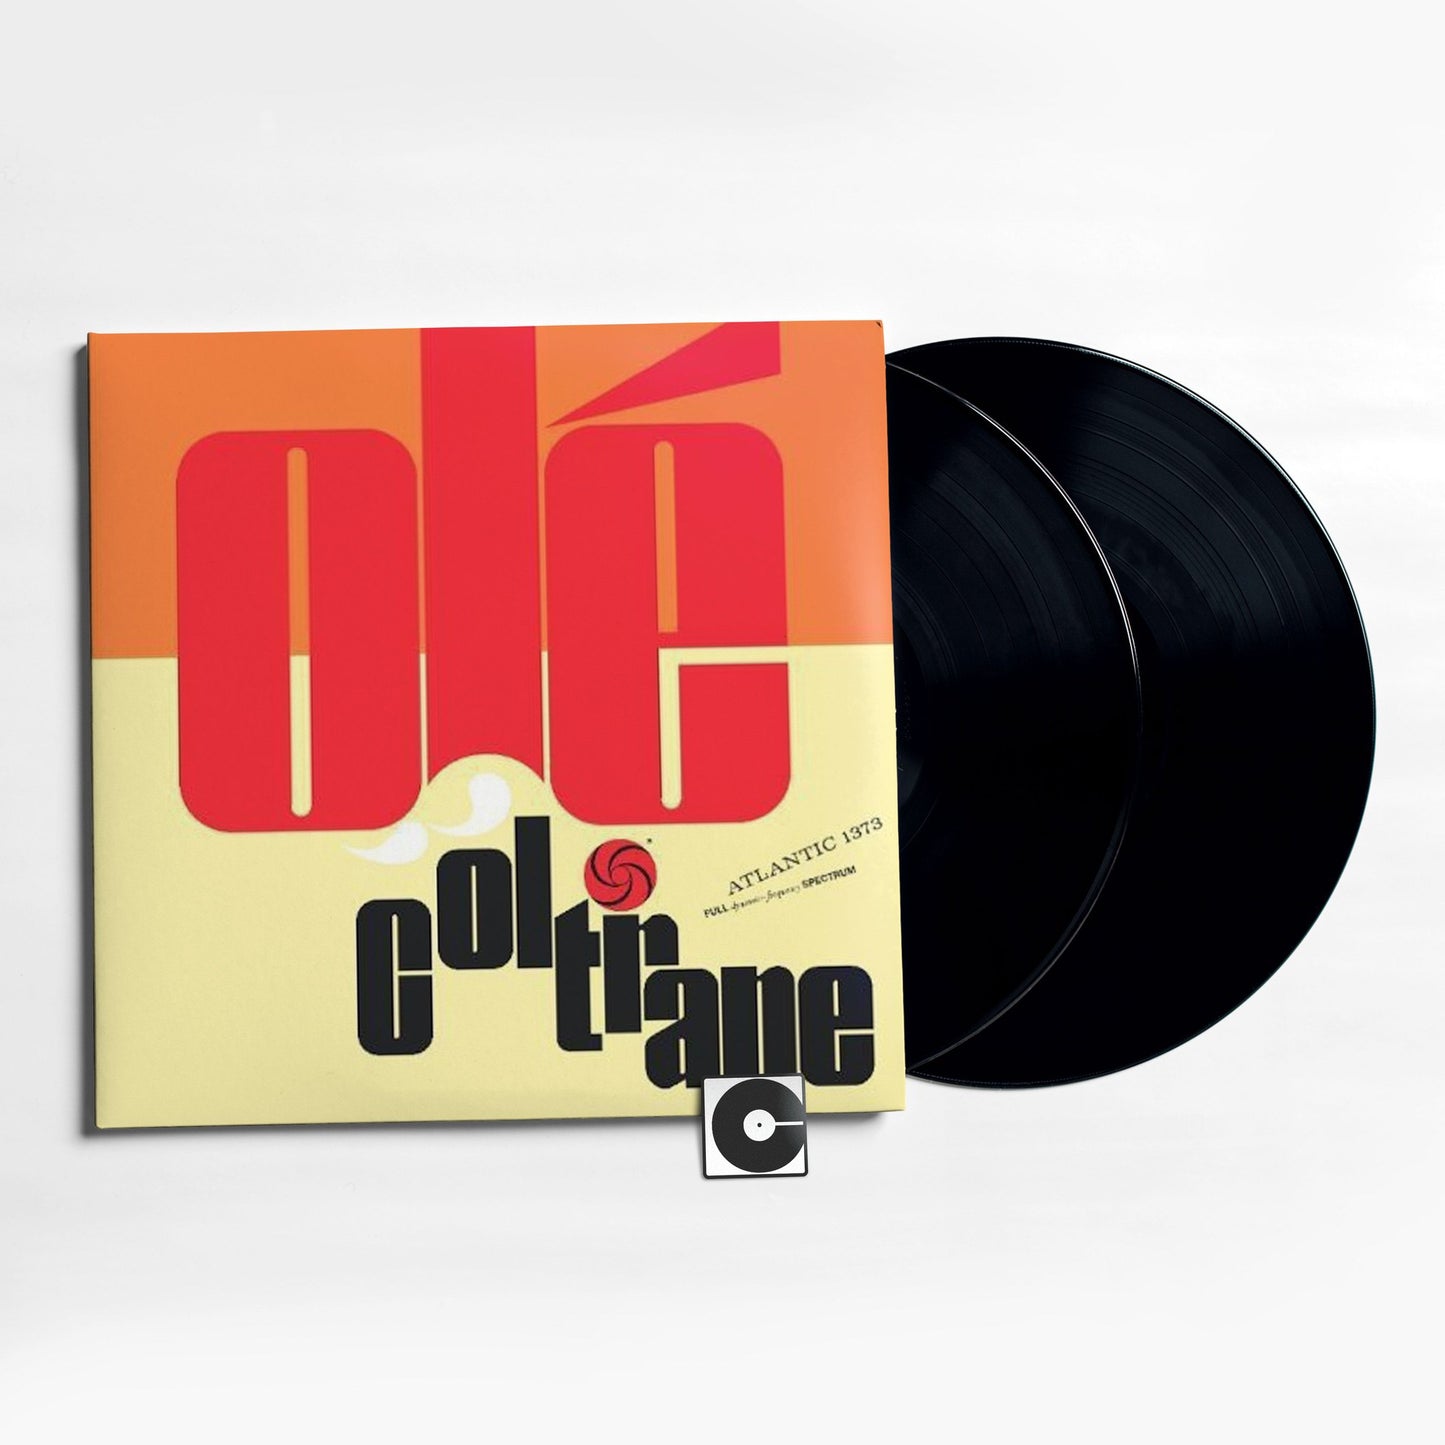 John Coltrane - "Ole Coltrane" ORG